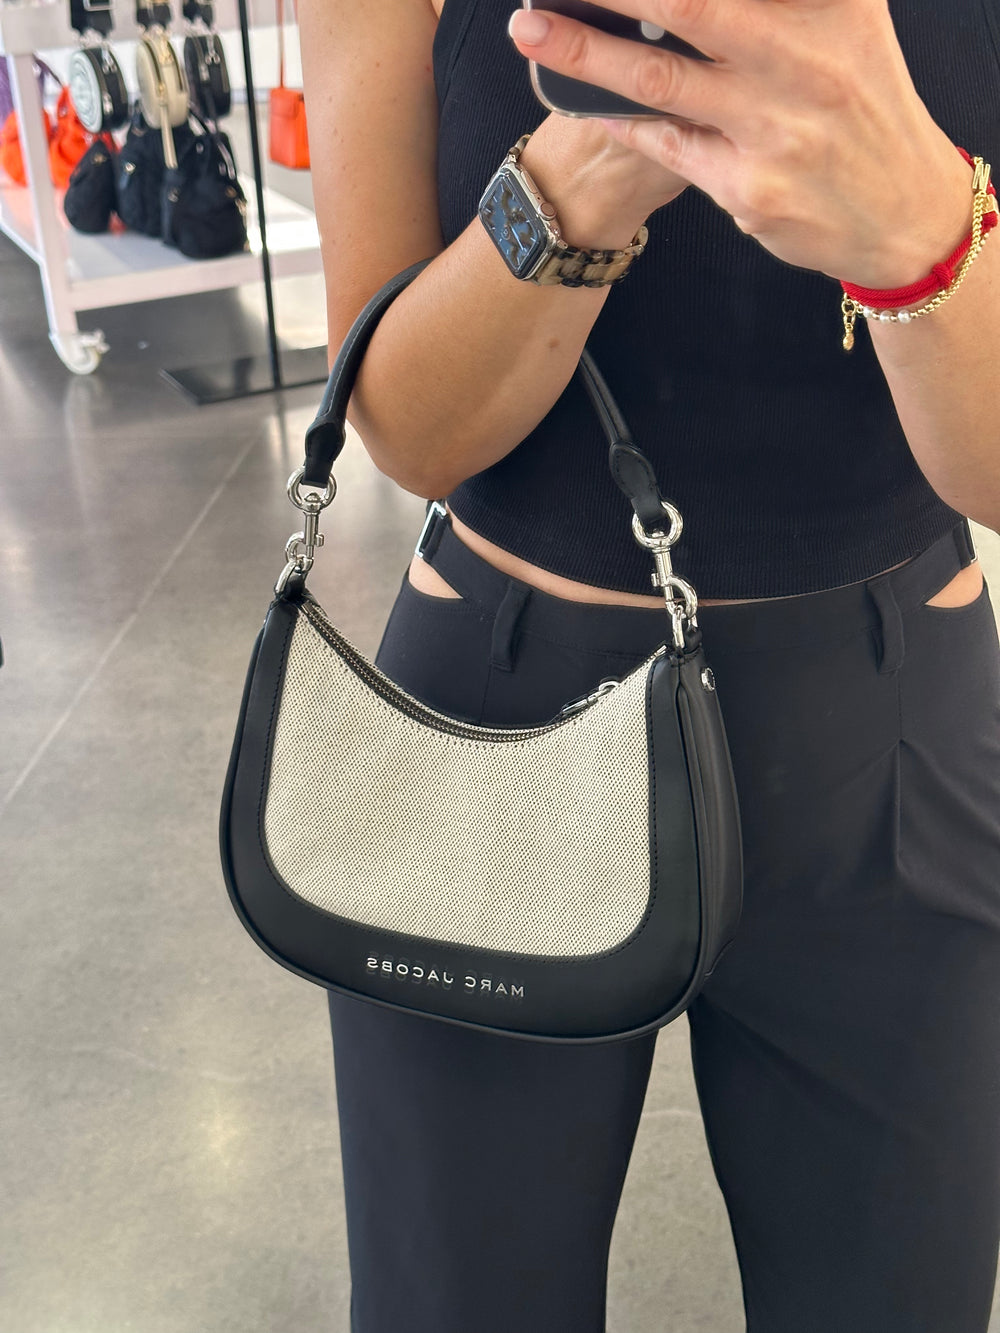 Marc Jacobs Small Leather Hobo Bag – Popshop Usa